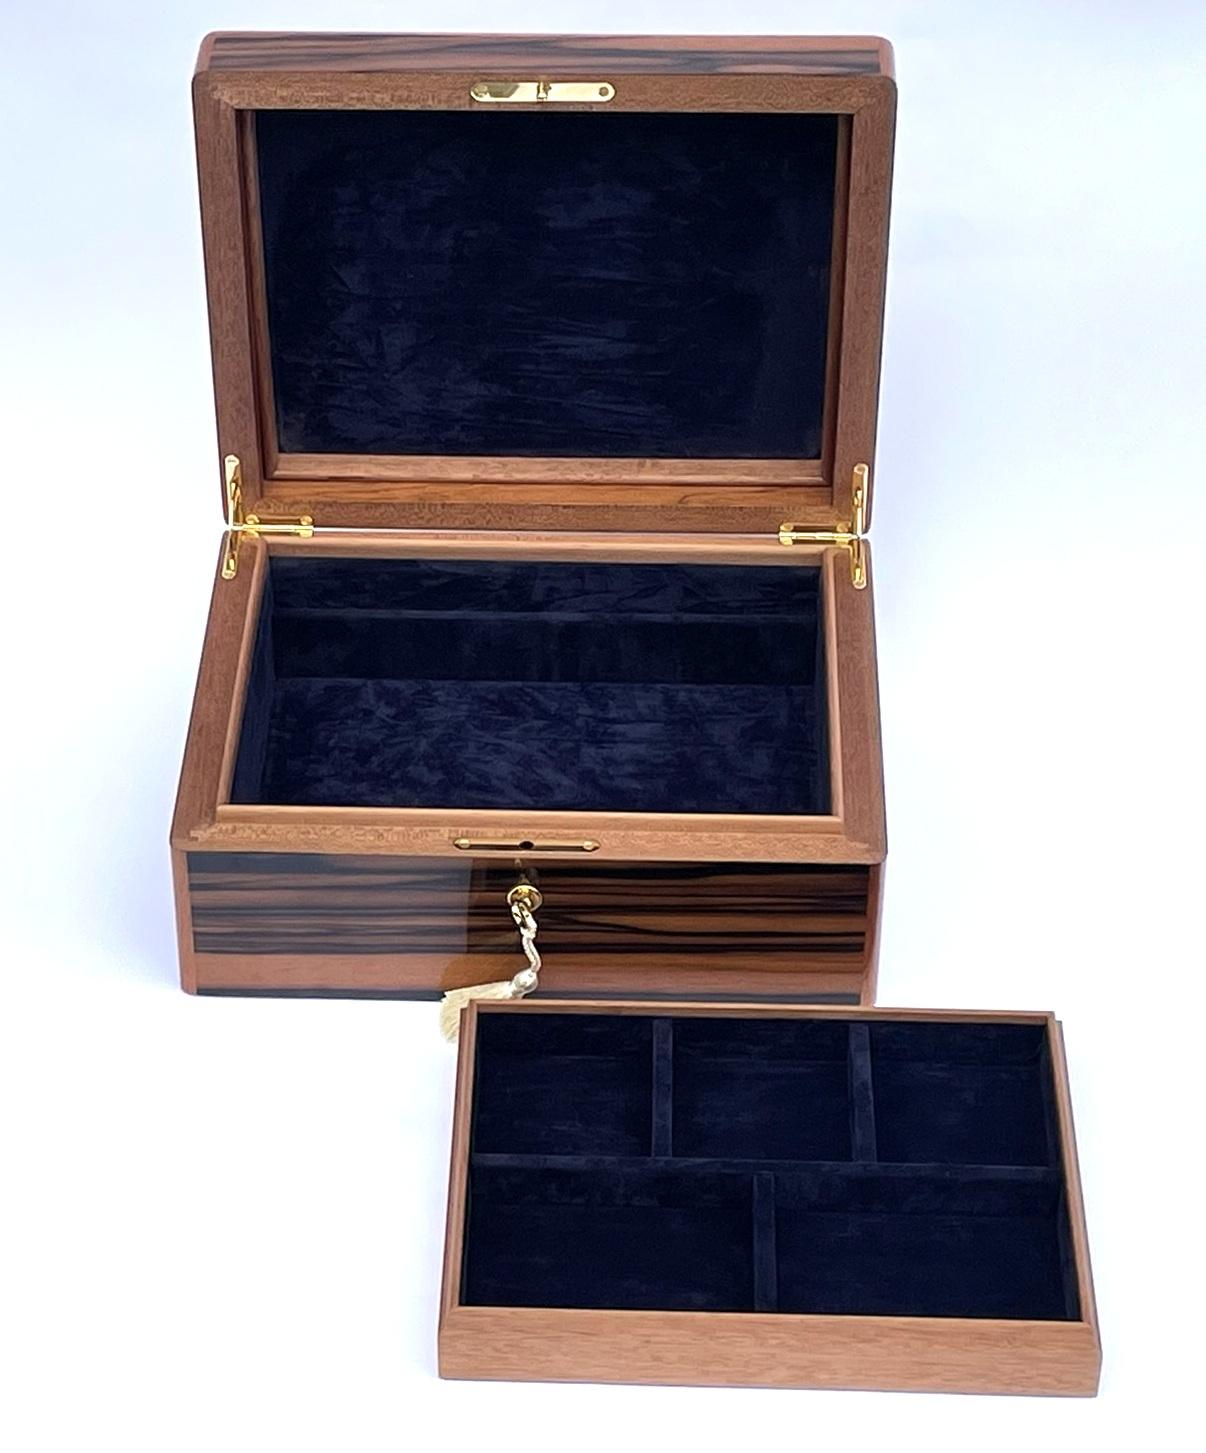 Polished Macassar Ebony Ladys Handmade Jewelry Casket Box by Manning of Ireland Irish New